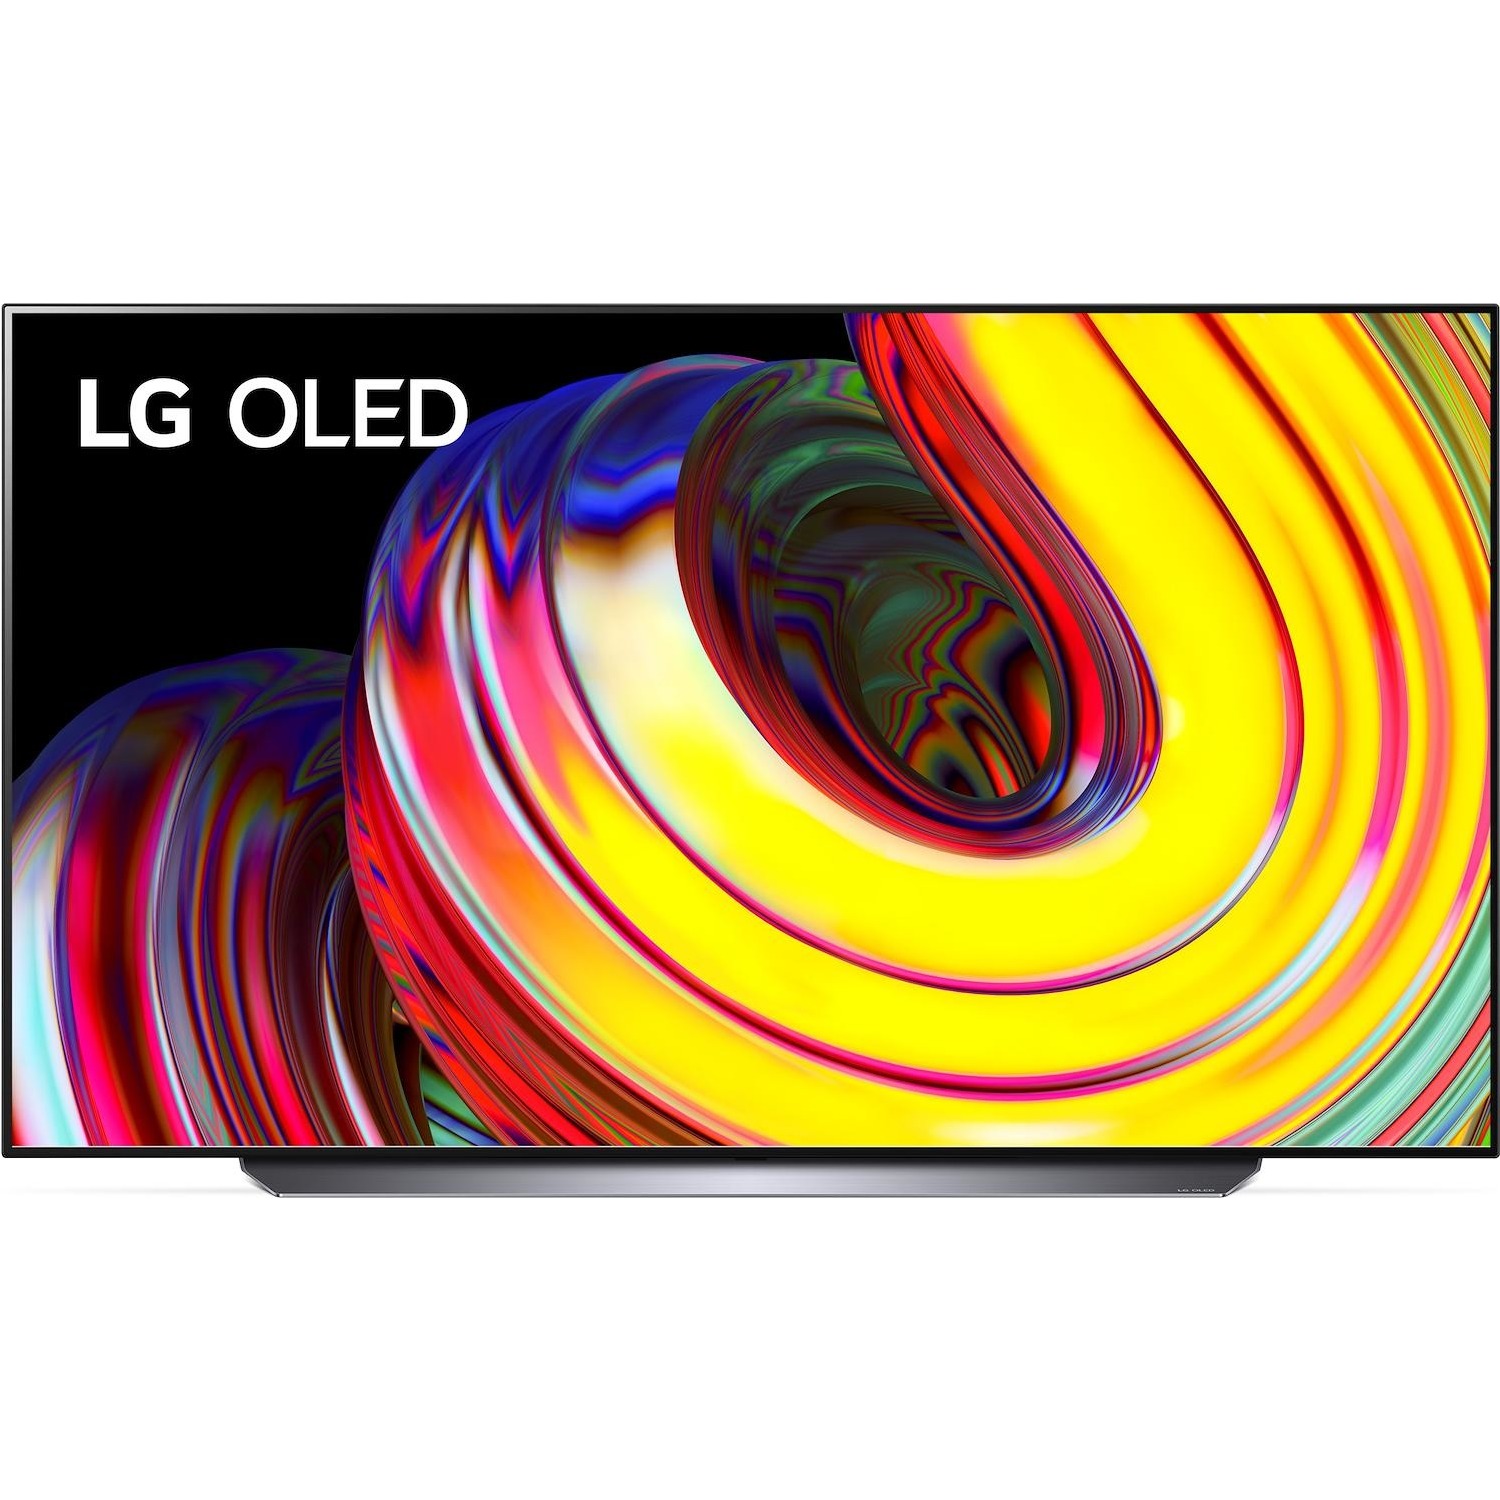 Immagine per TV OLED UHD 4K Smart LG OLED65CS6 da DIMOStore